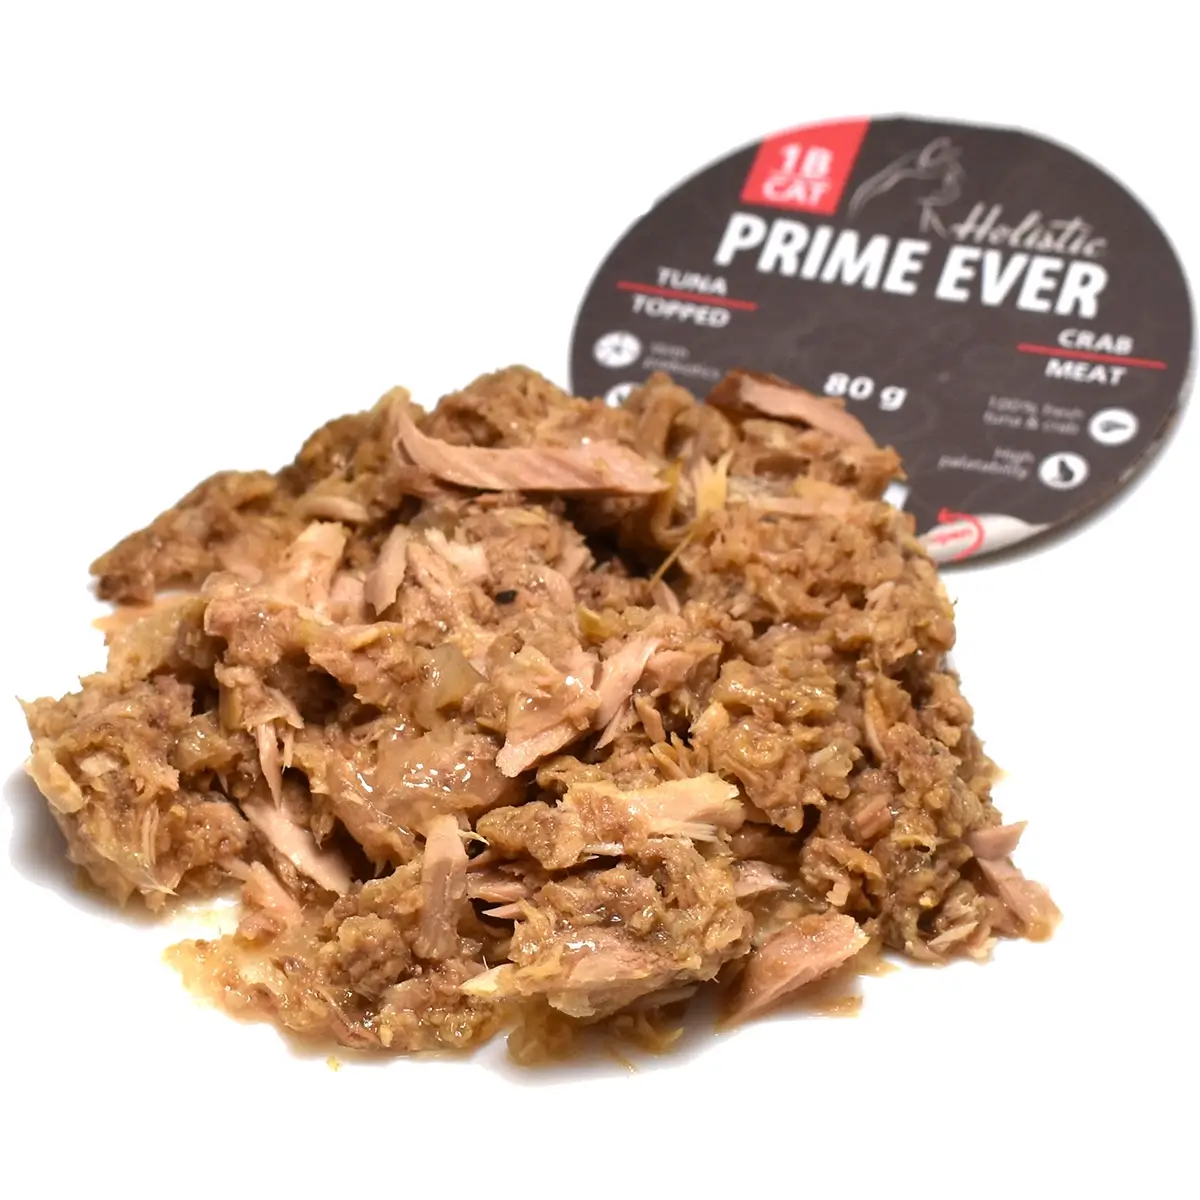 Консервы Prime Ever Tuna topped with Crab meat для кошек